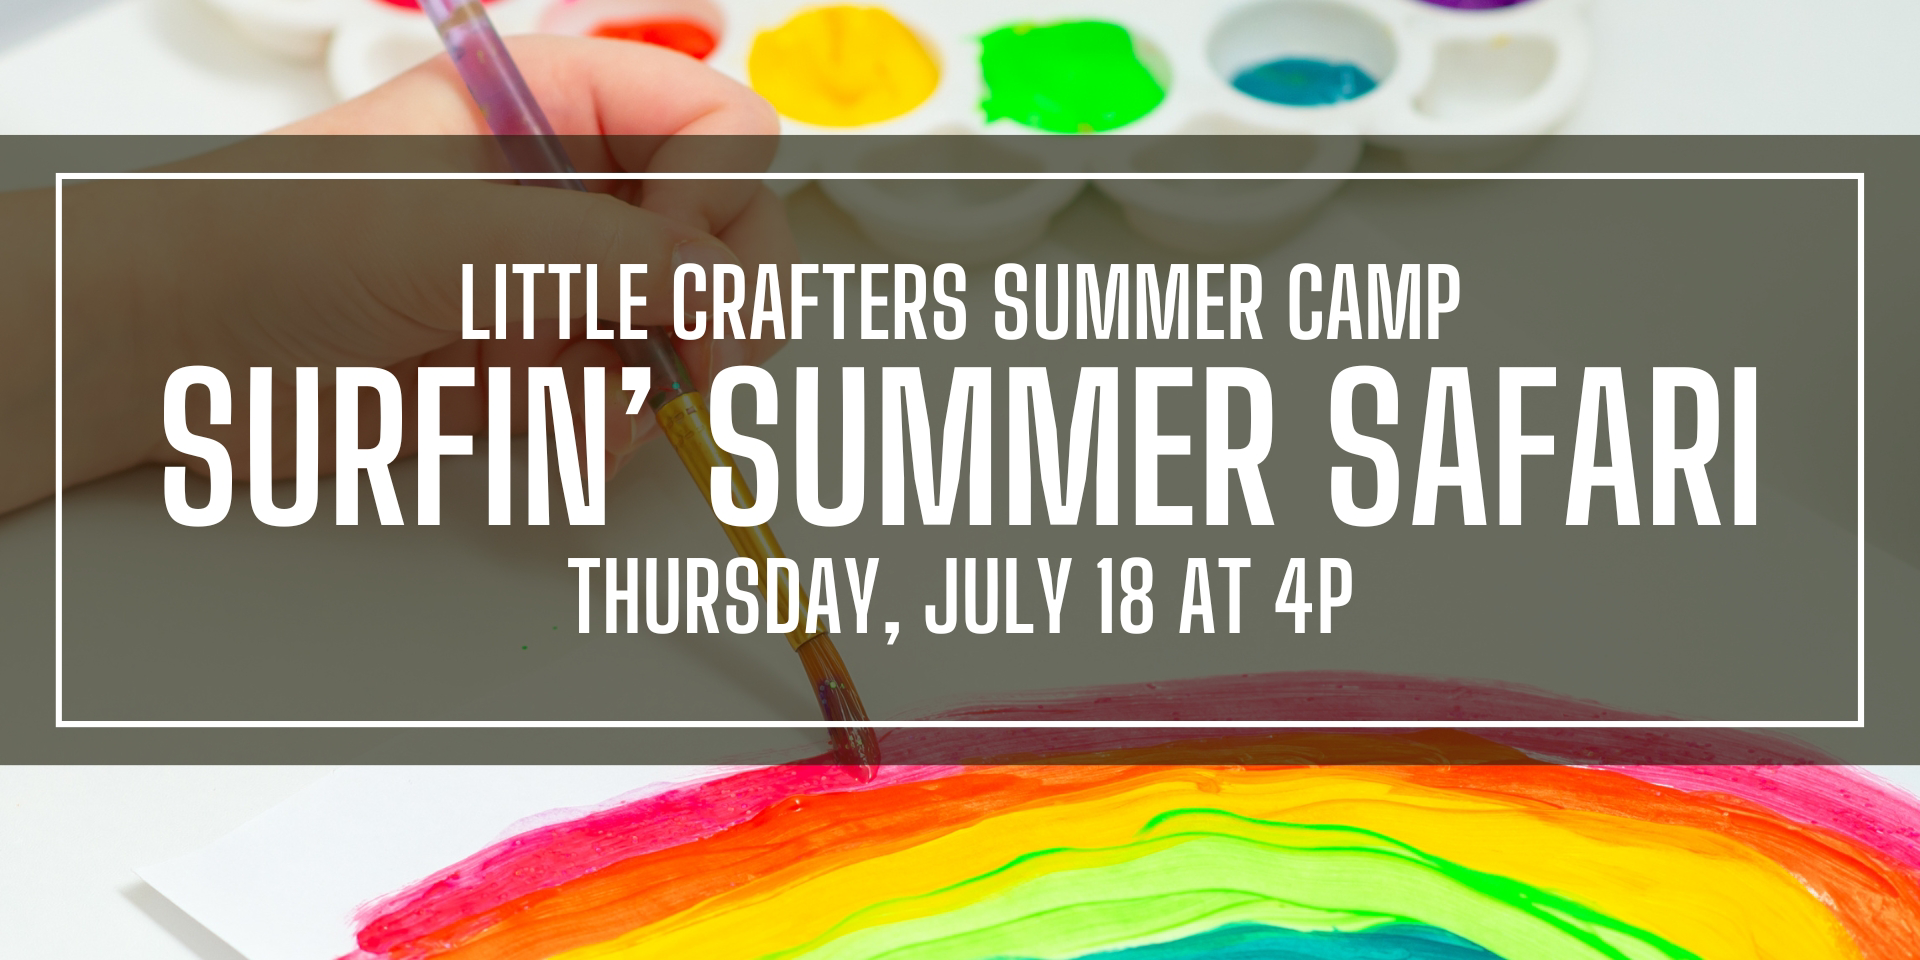 Little Crafters Summer Camp: Sufin' Summer Safari